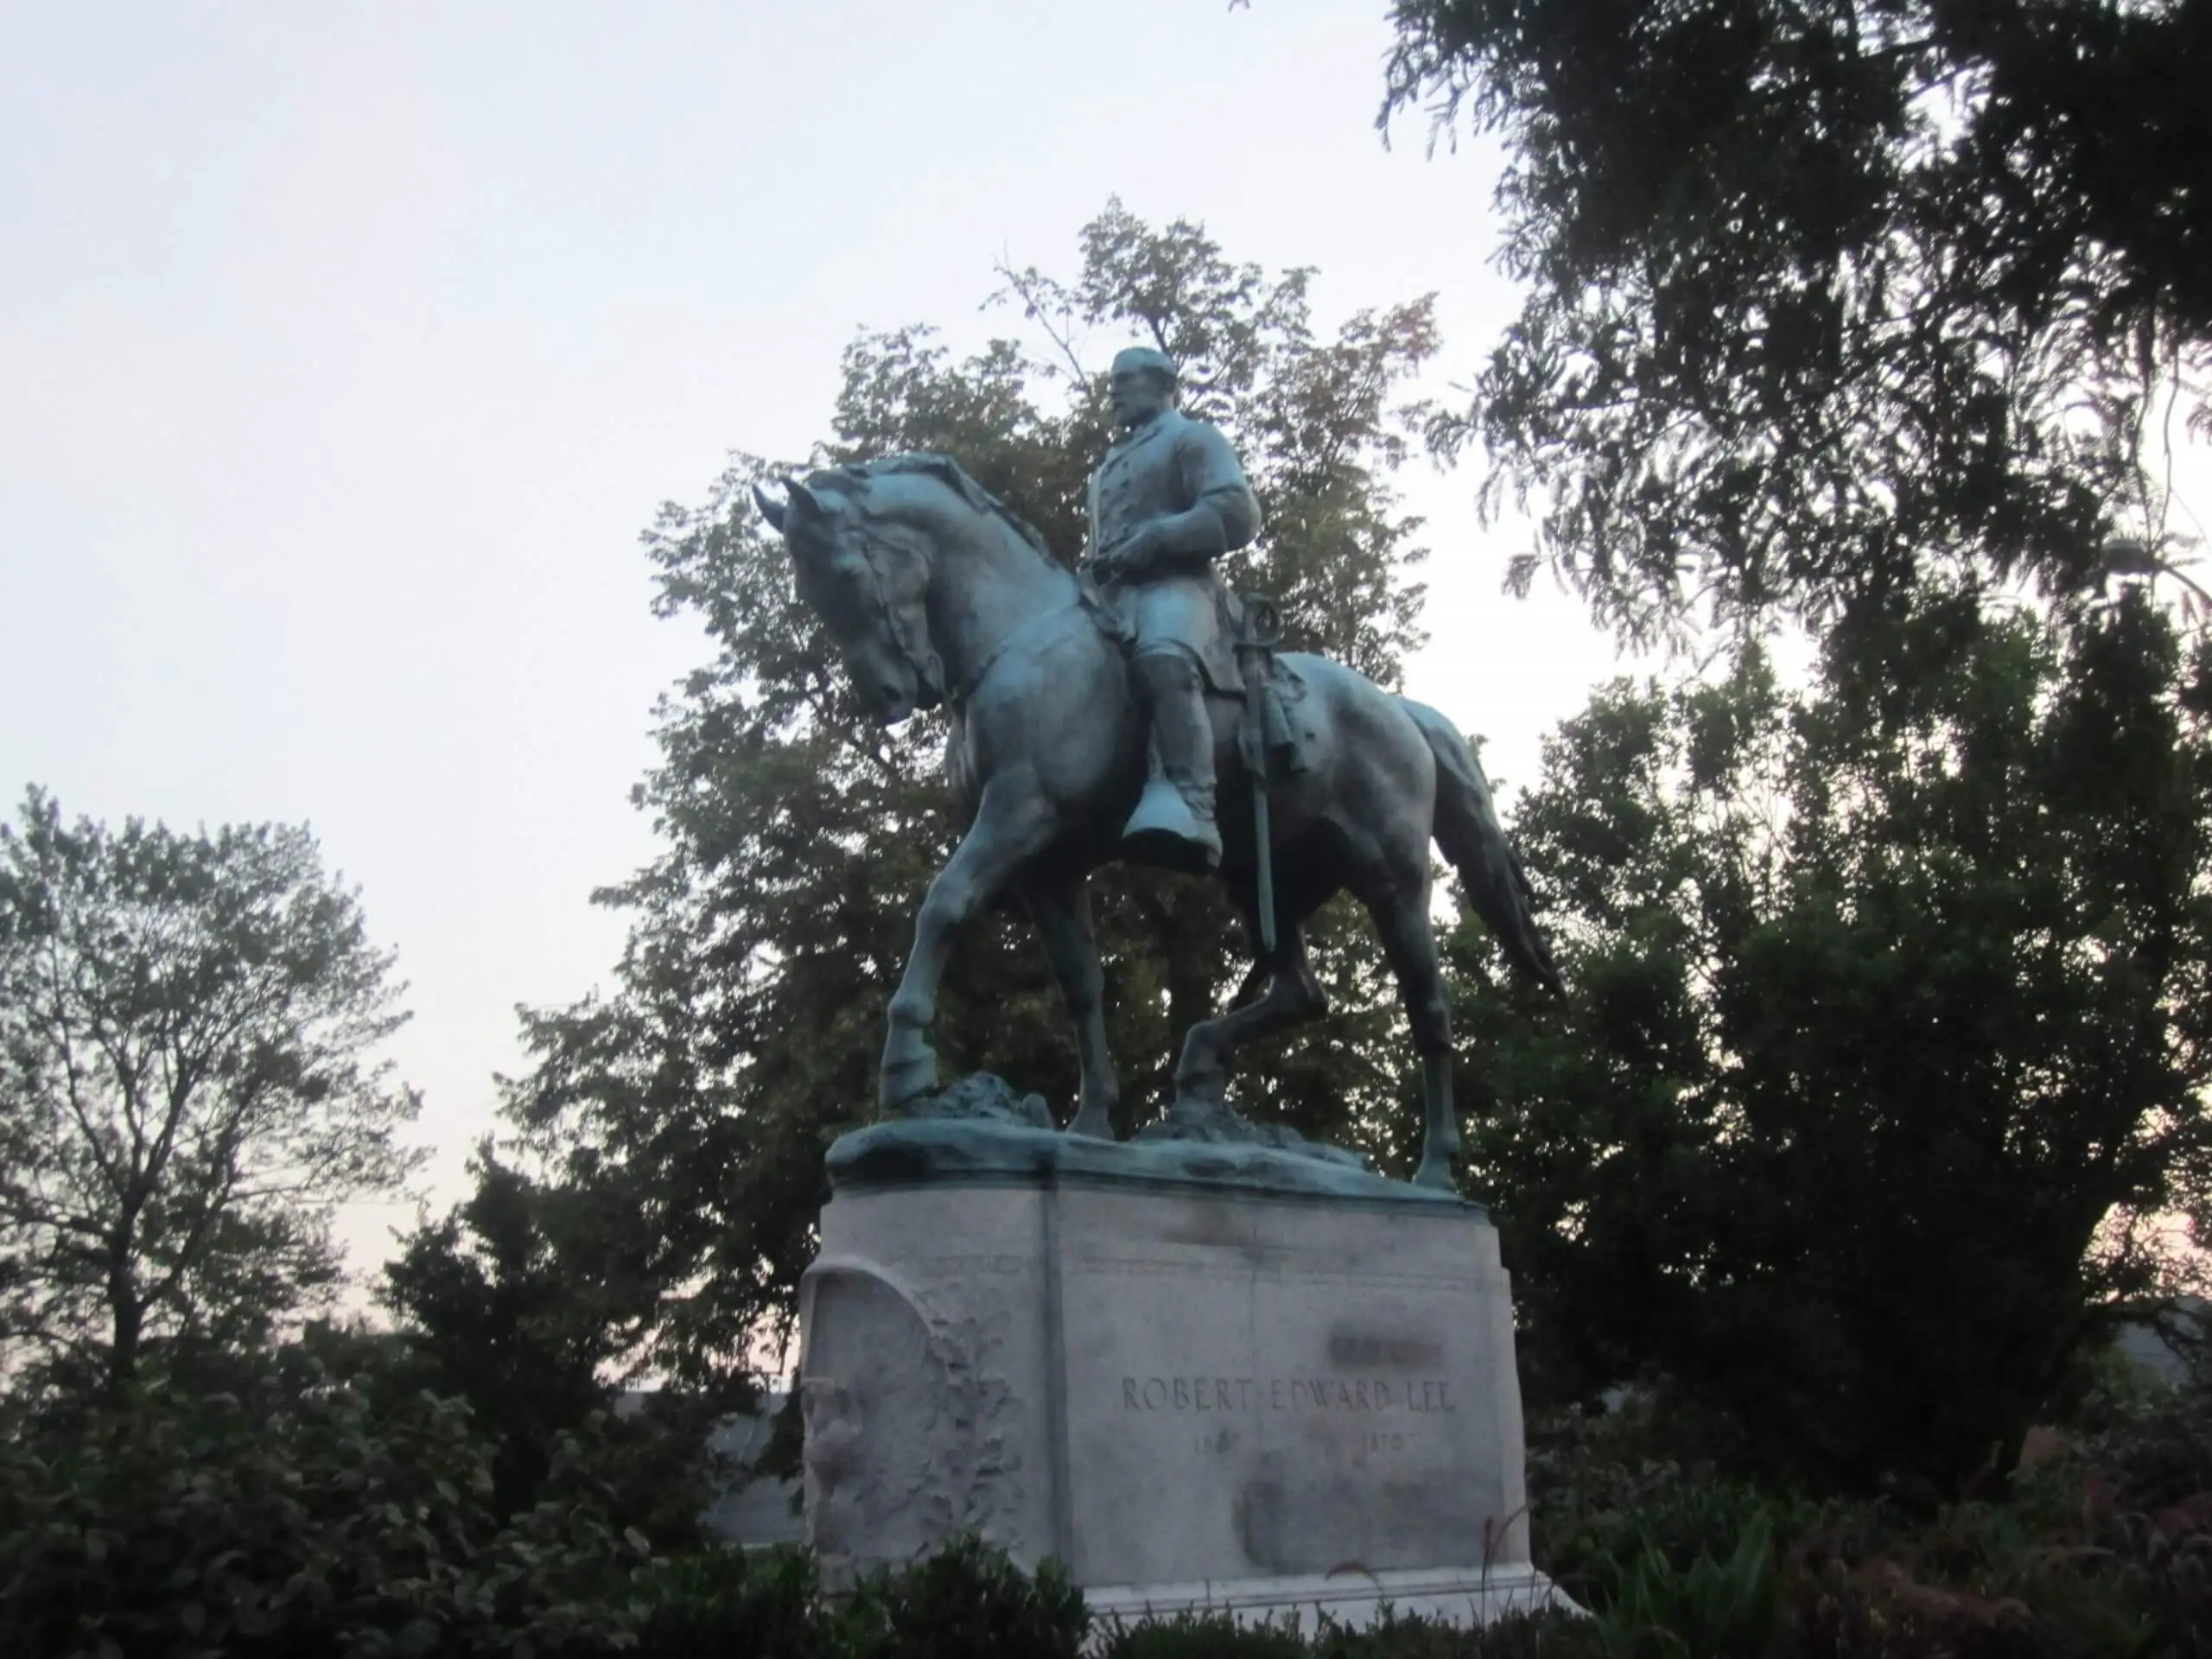 Statue of Robert E Lee riding a horse